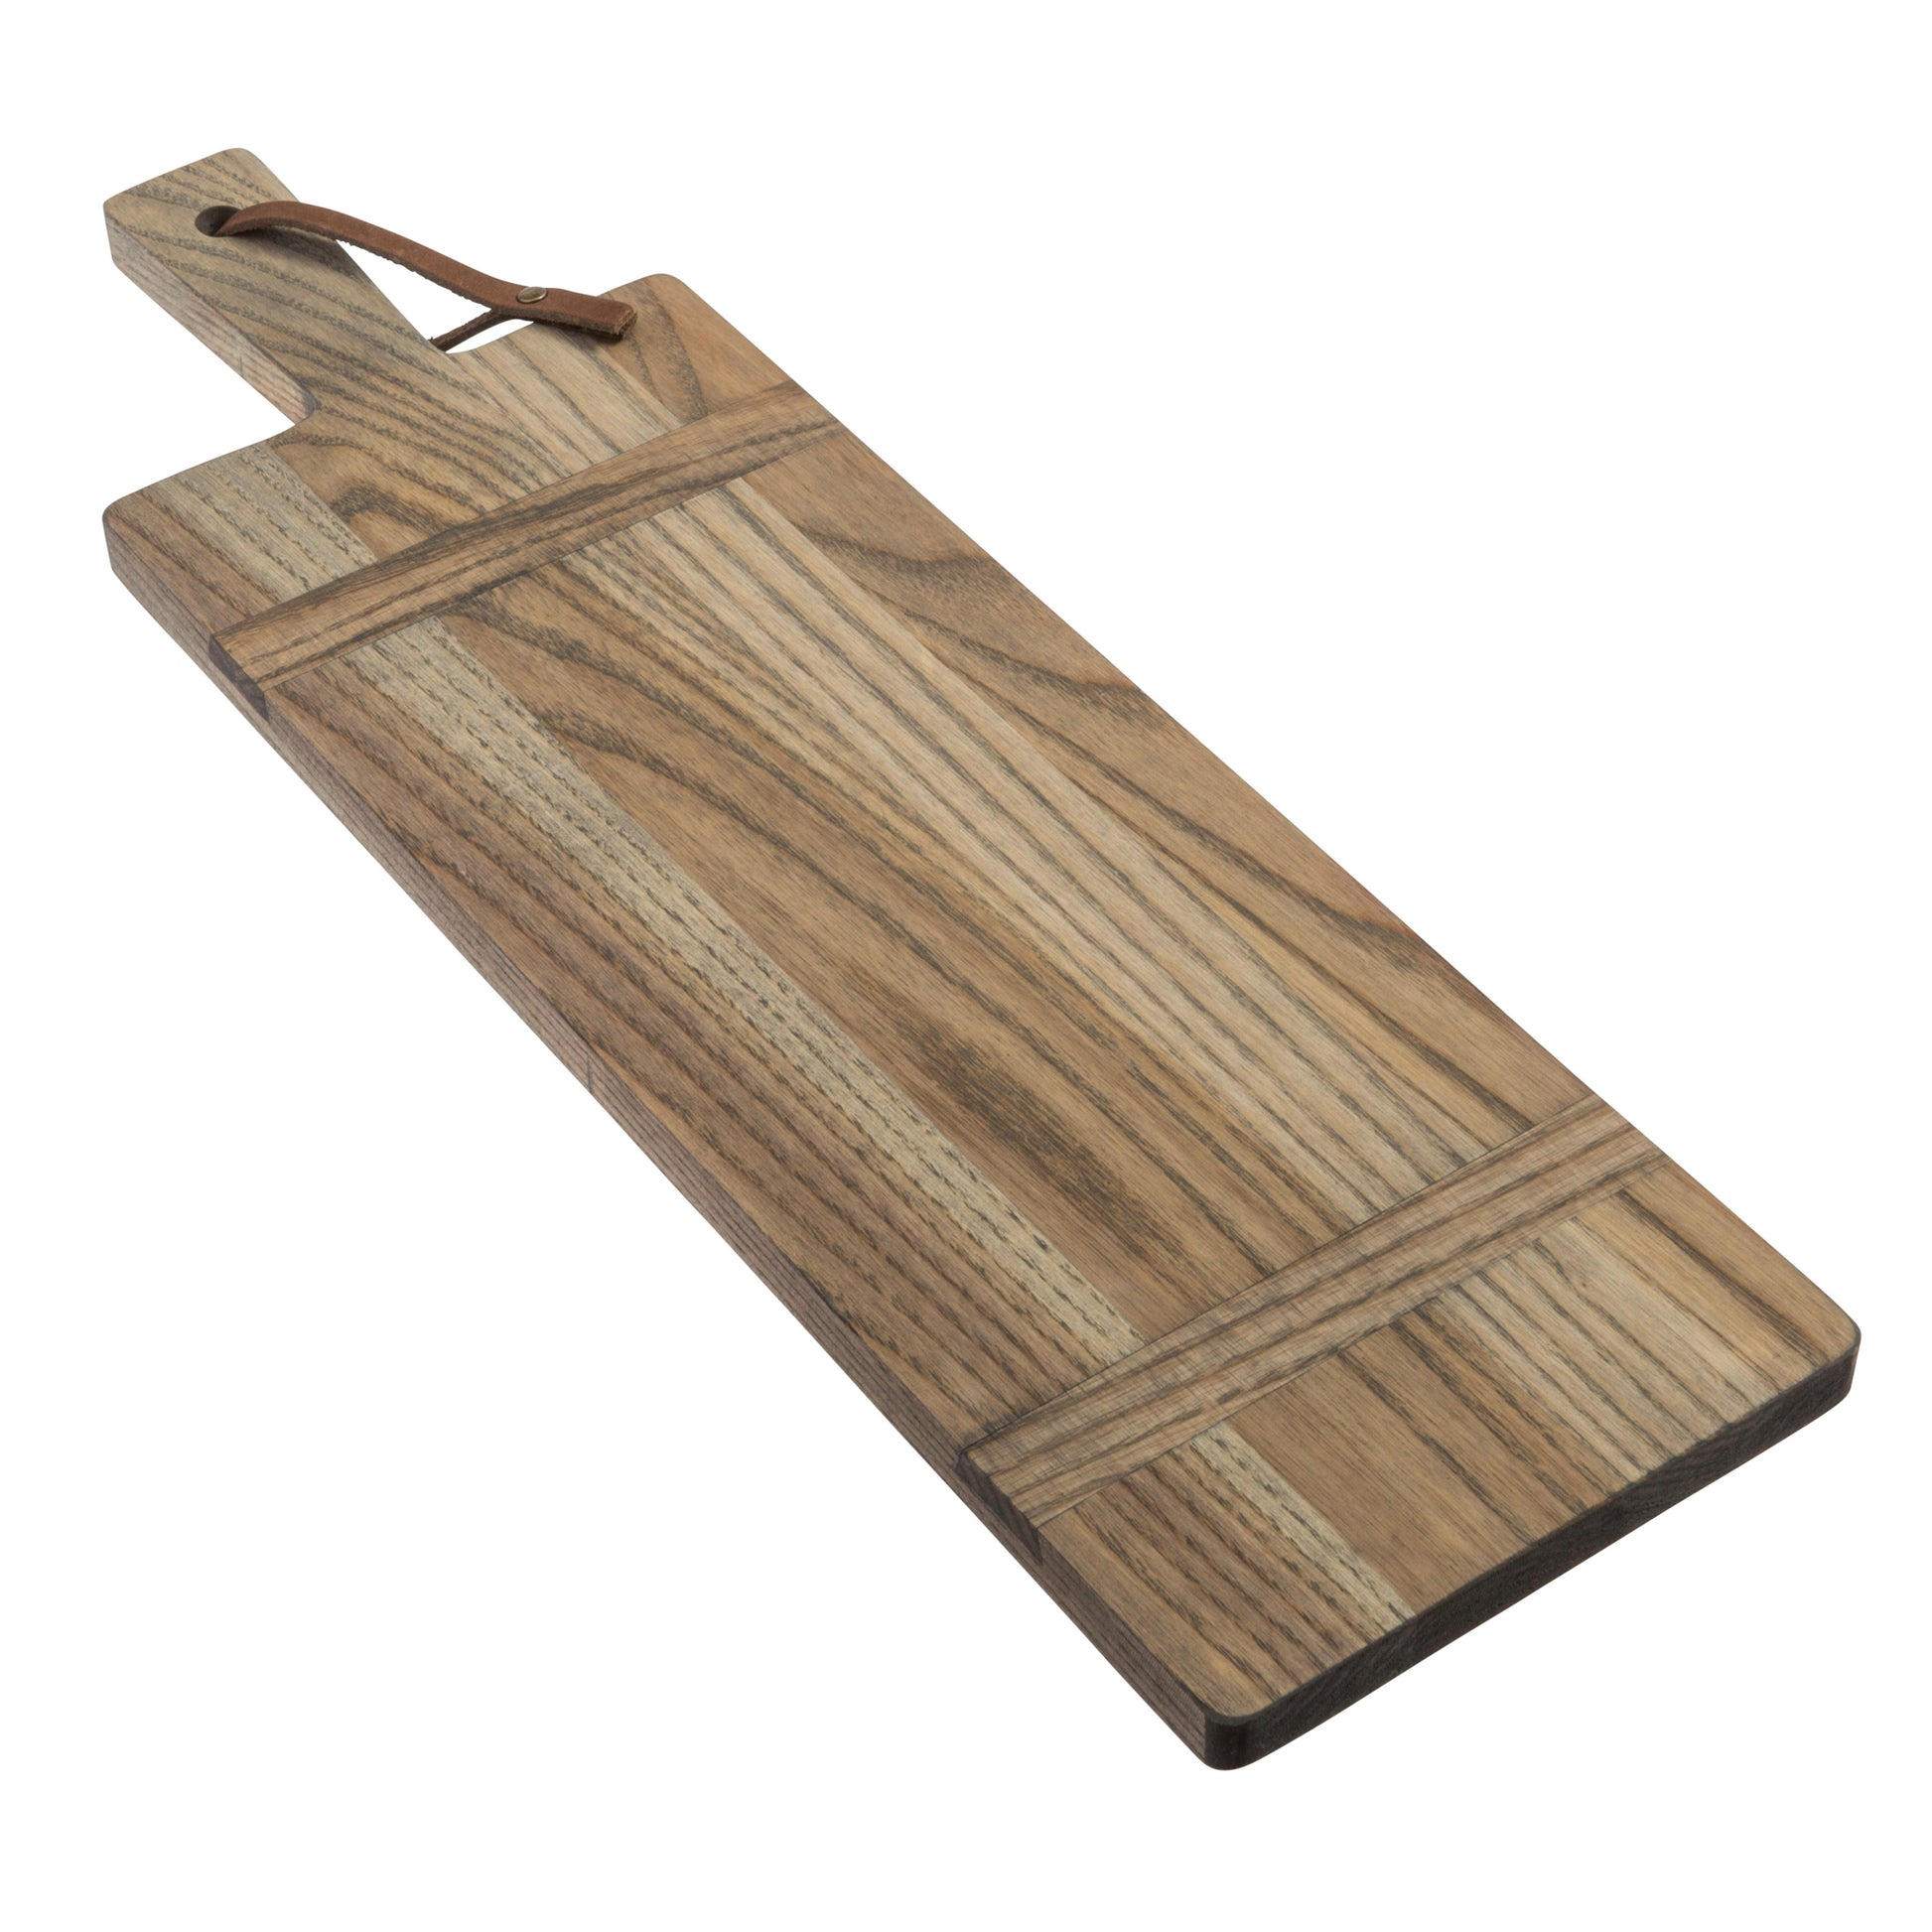 Ash Plank Serving Board-20" x 6"